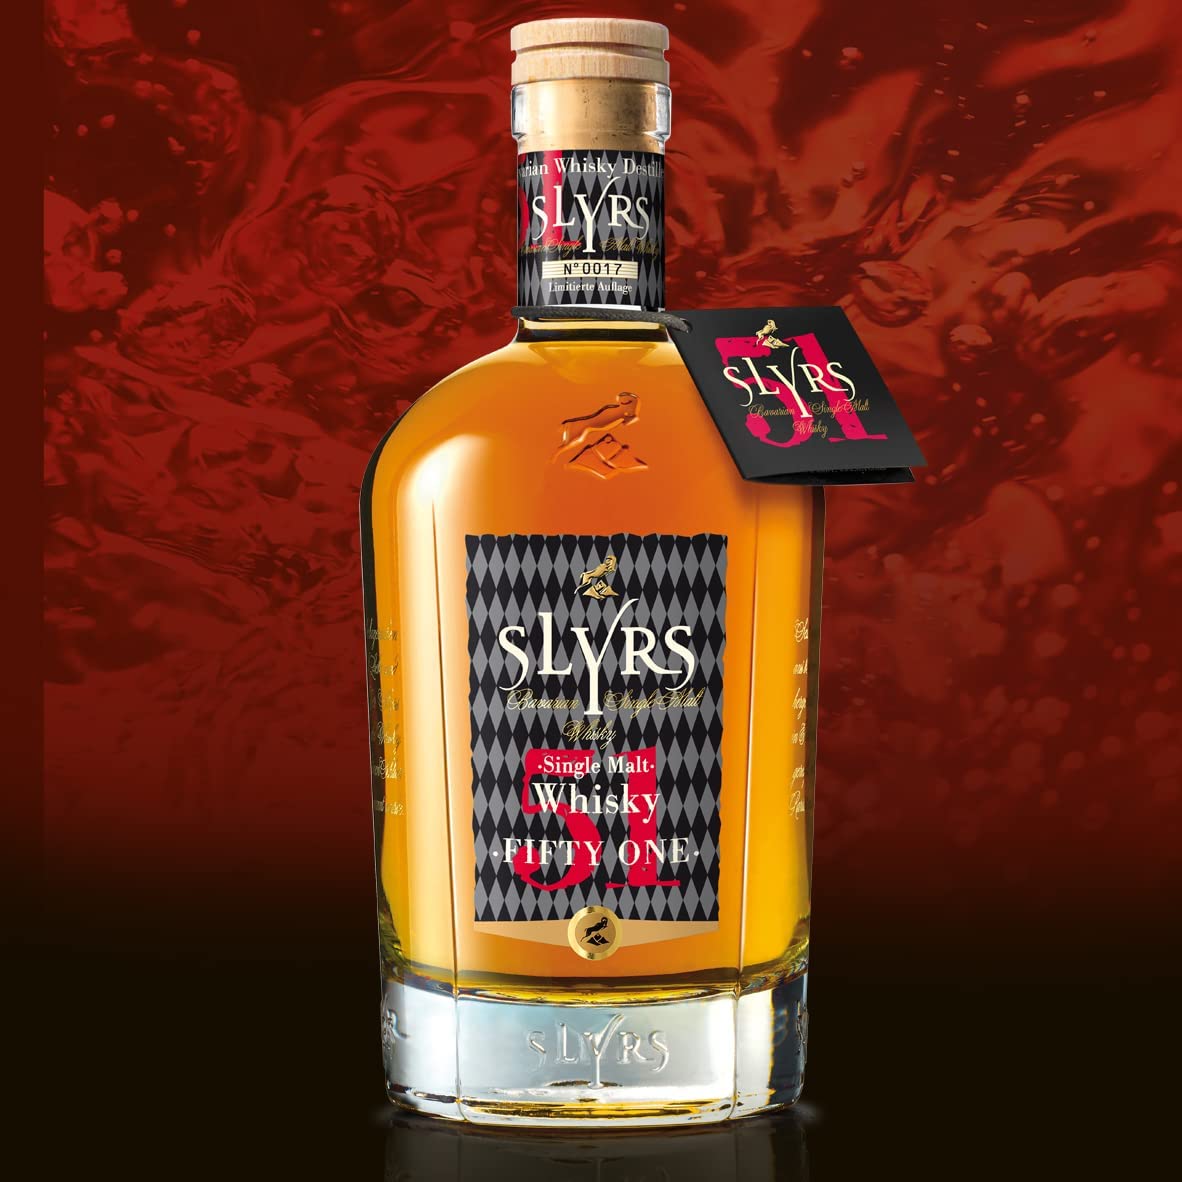 Bavarian Single One Whisky – Life Whisky My Fifty vol. 51% Slyrs – Malt